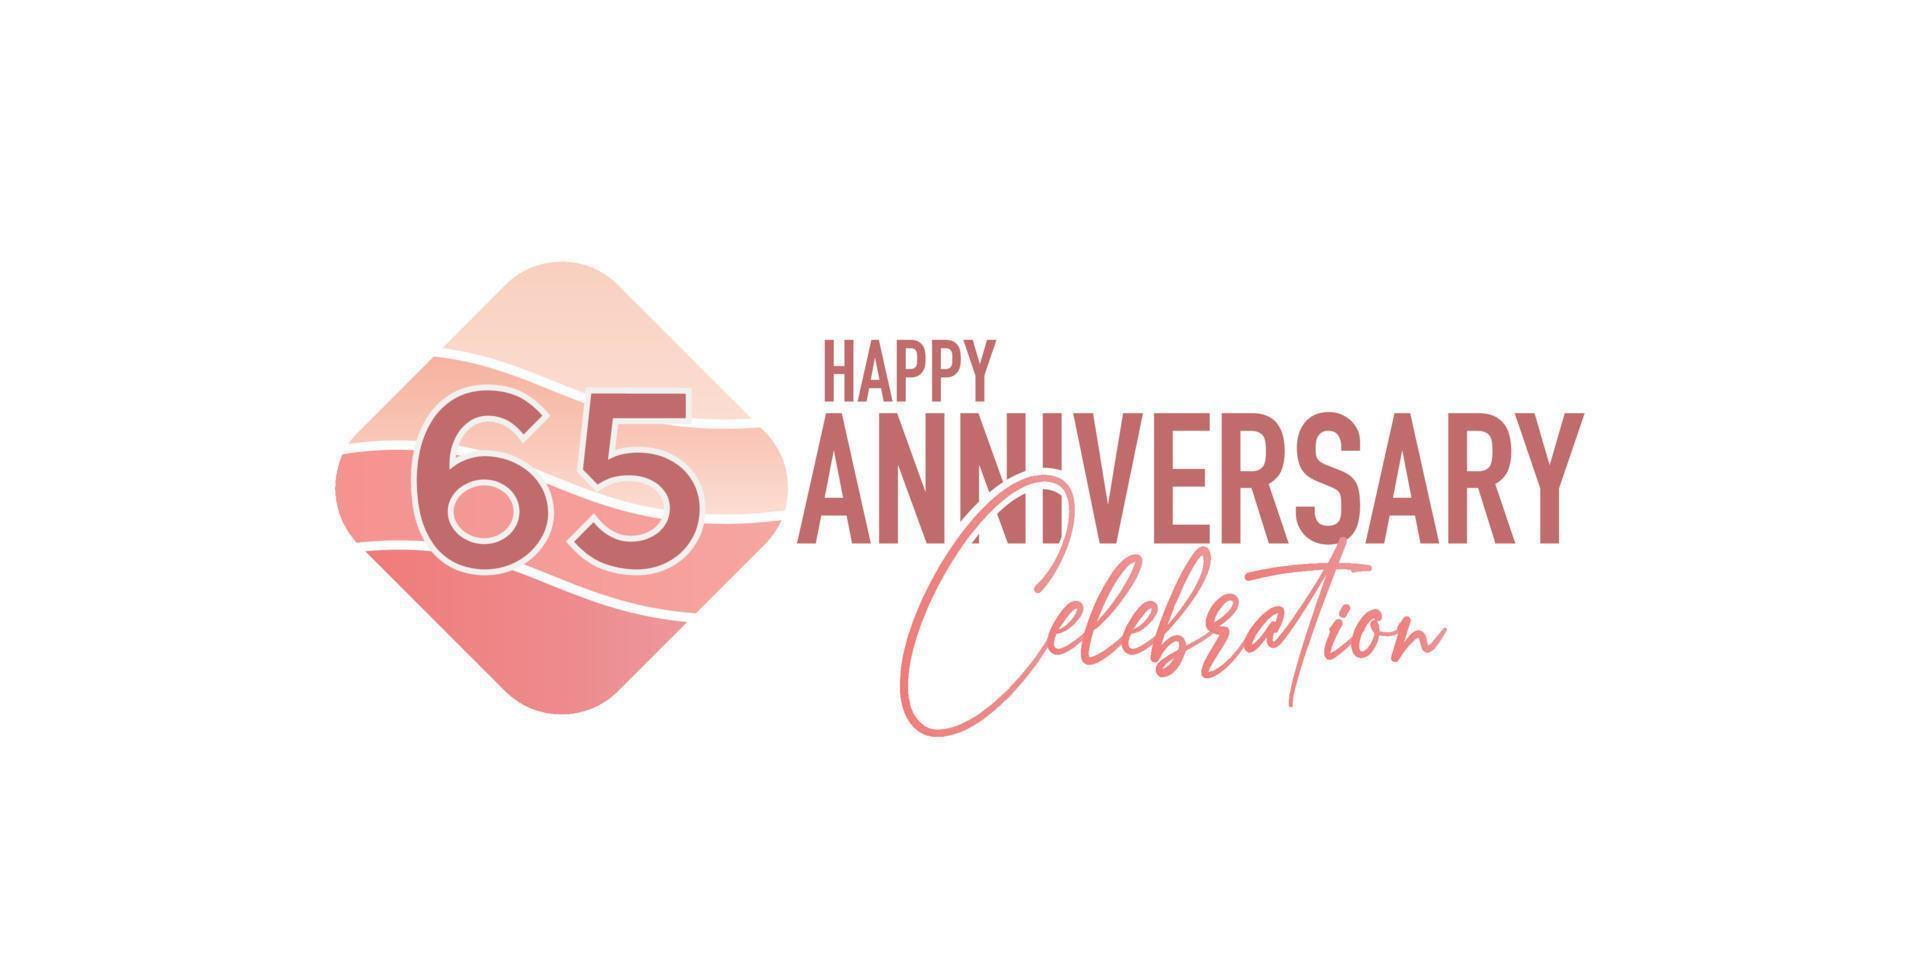 65 years anniversary logo vector illustration design celebration with pink geometric design